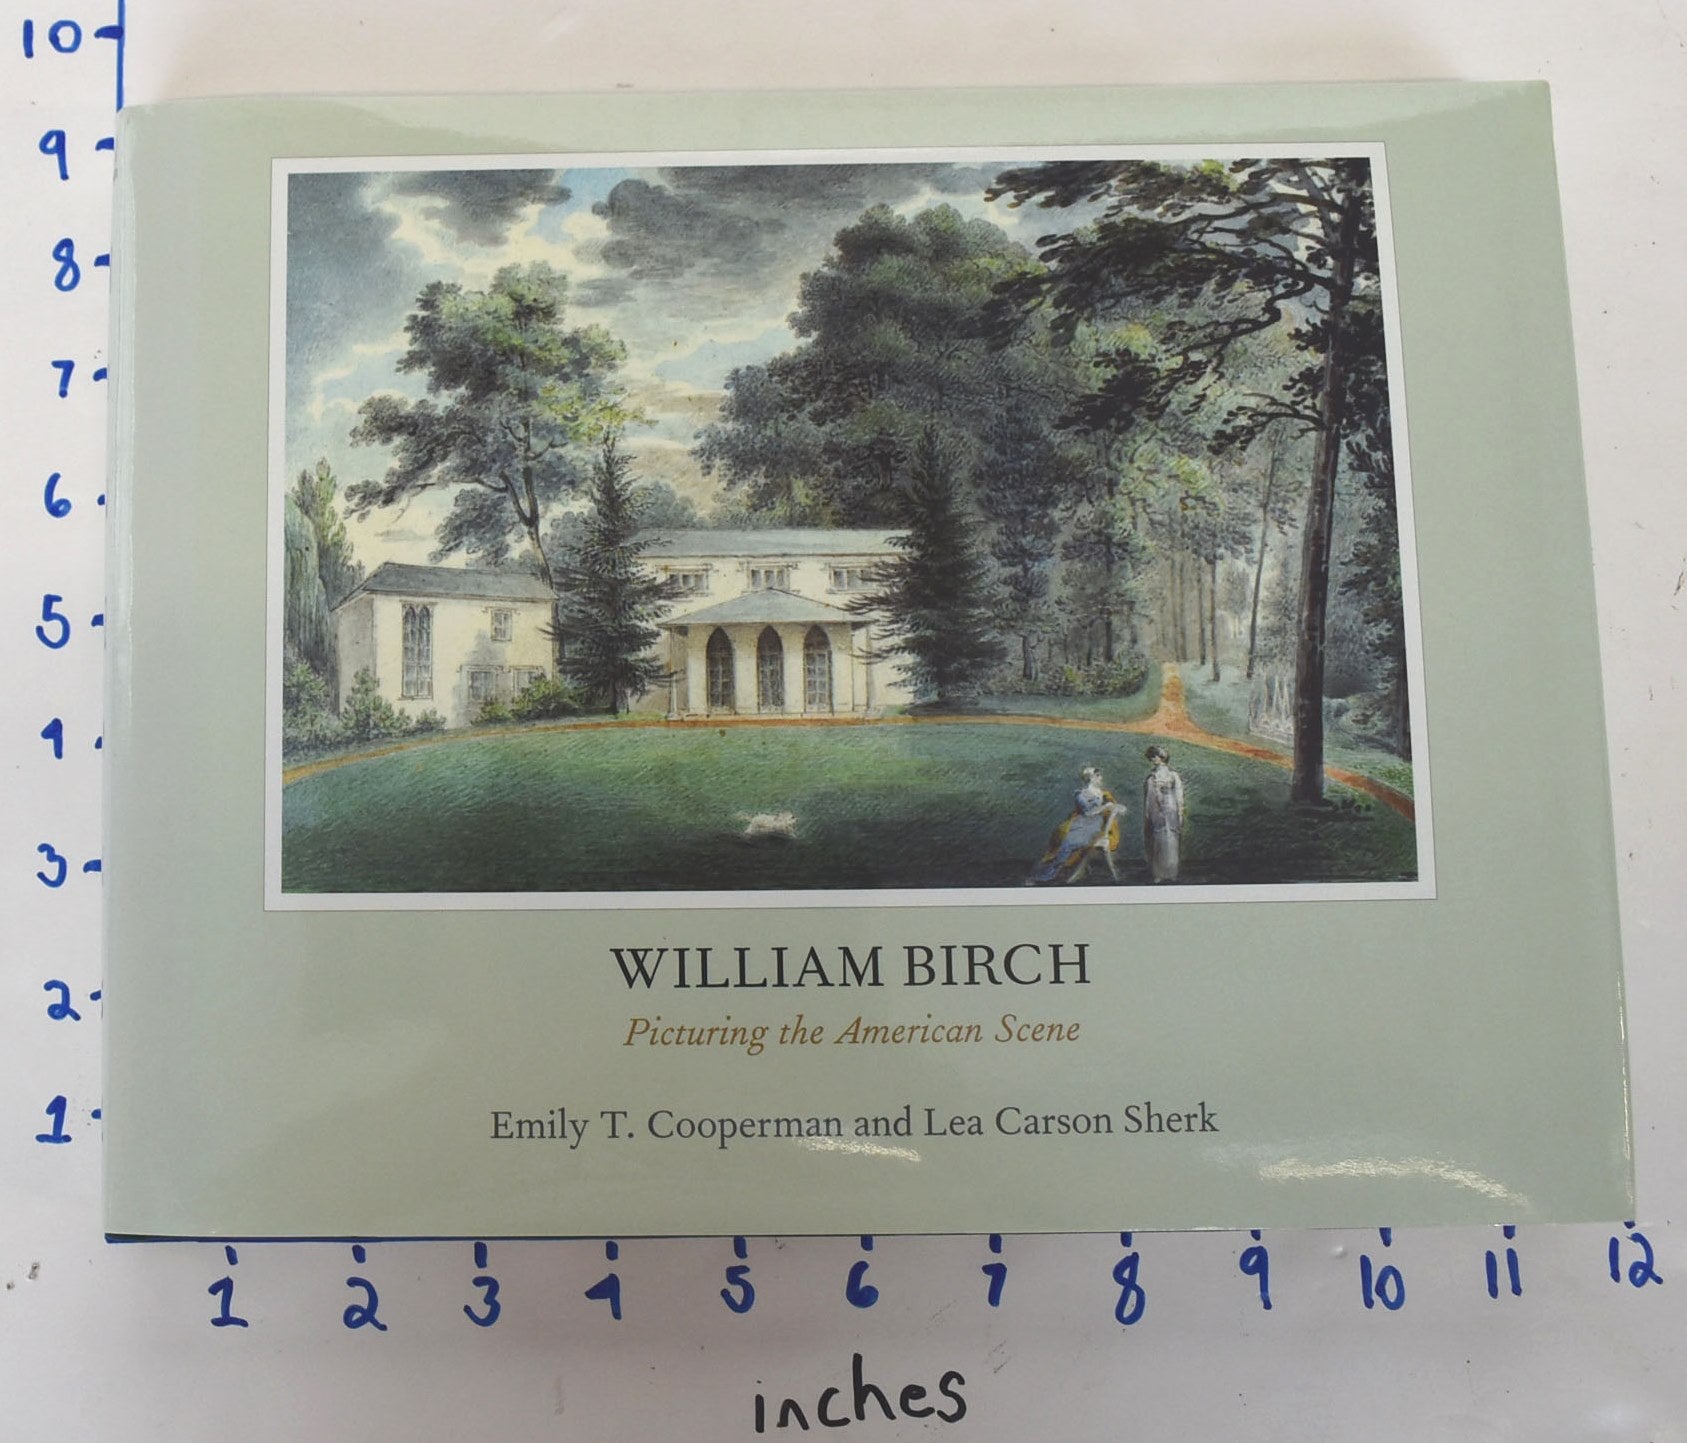 Cooperman, Emily T. and Lea Carson Sherk - William Birch: Picturing the American Scene